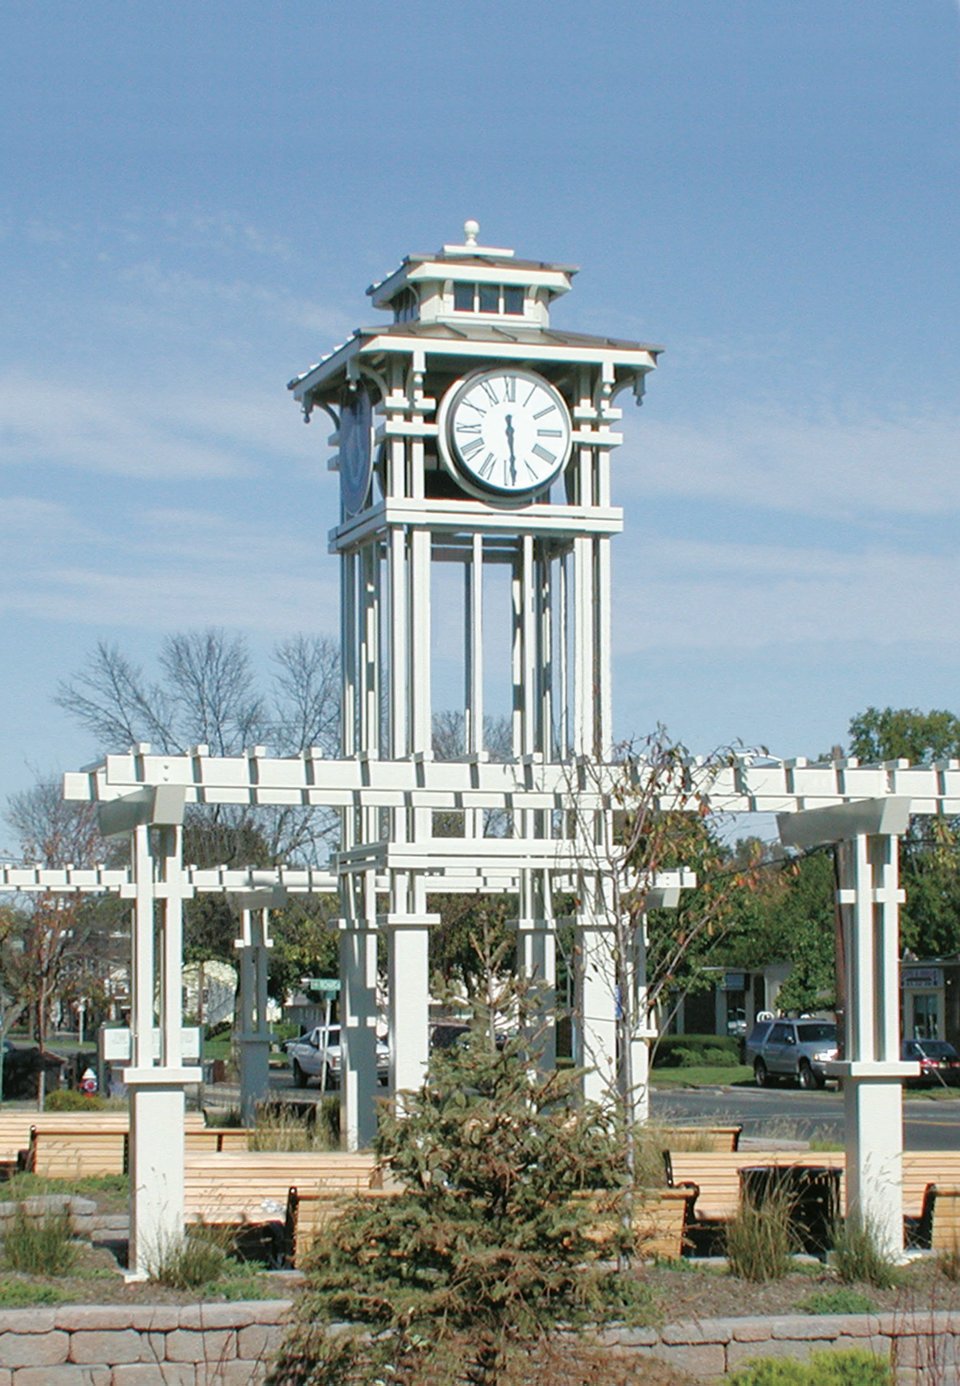 Clock Tower in Piscataway, NJ